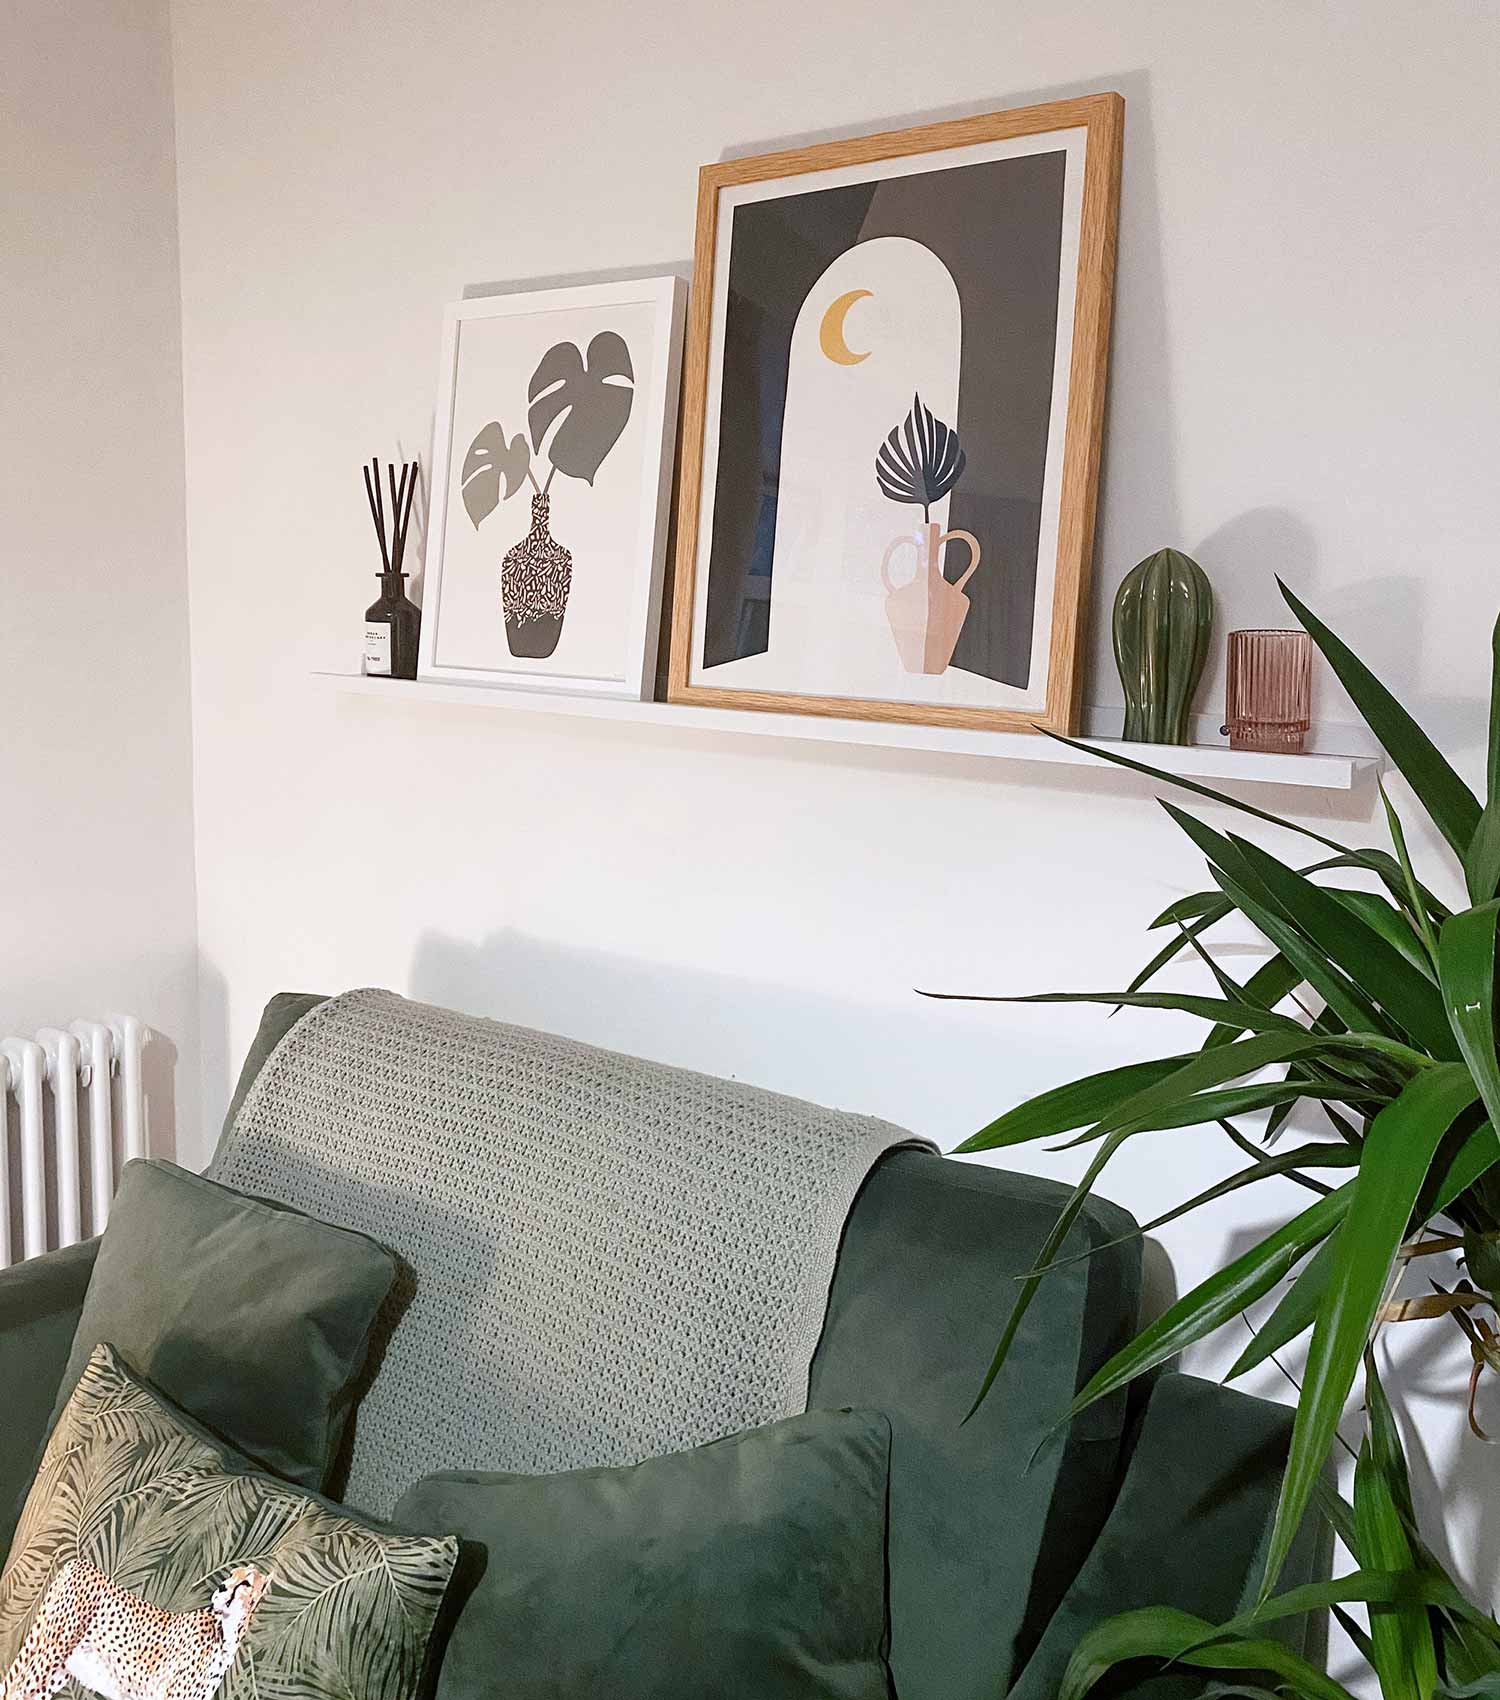 Green Lili Framed Botanical Prints on Picture Shelf above Sofa